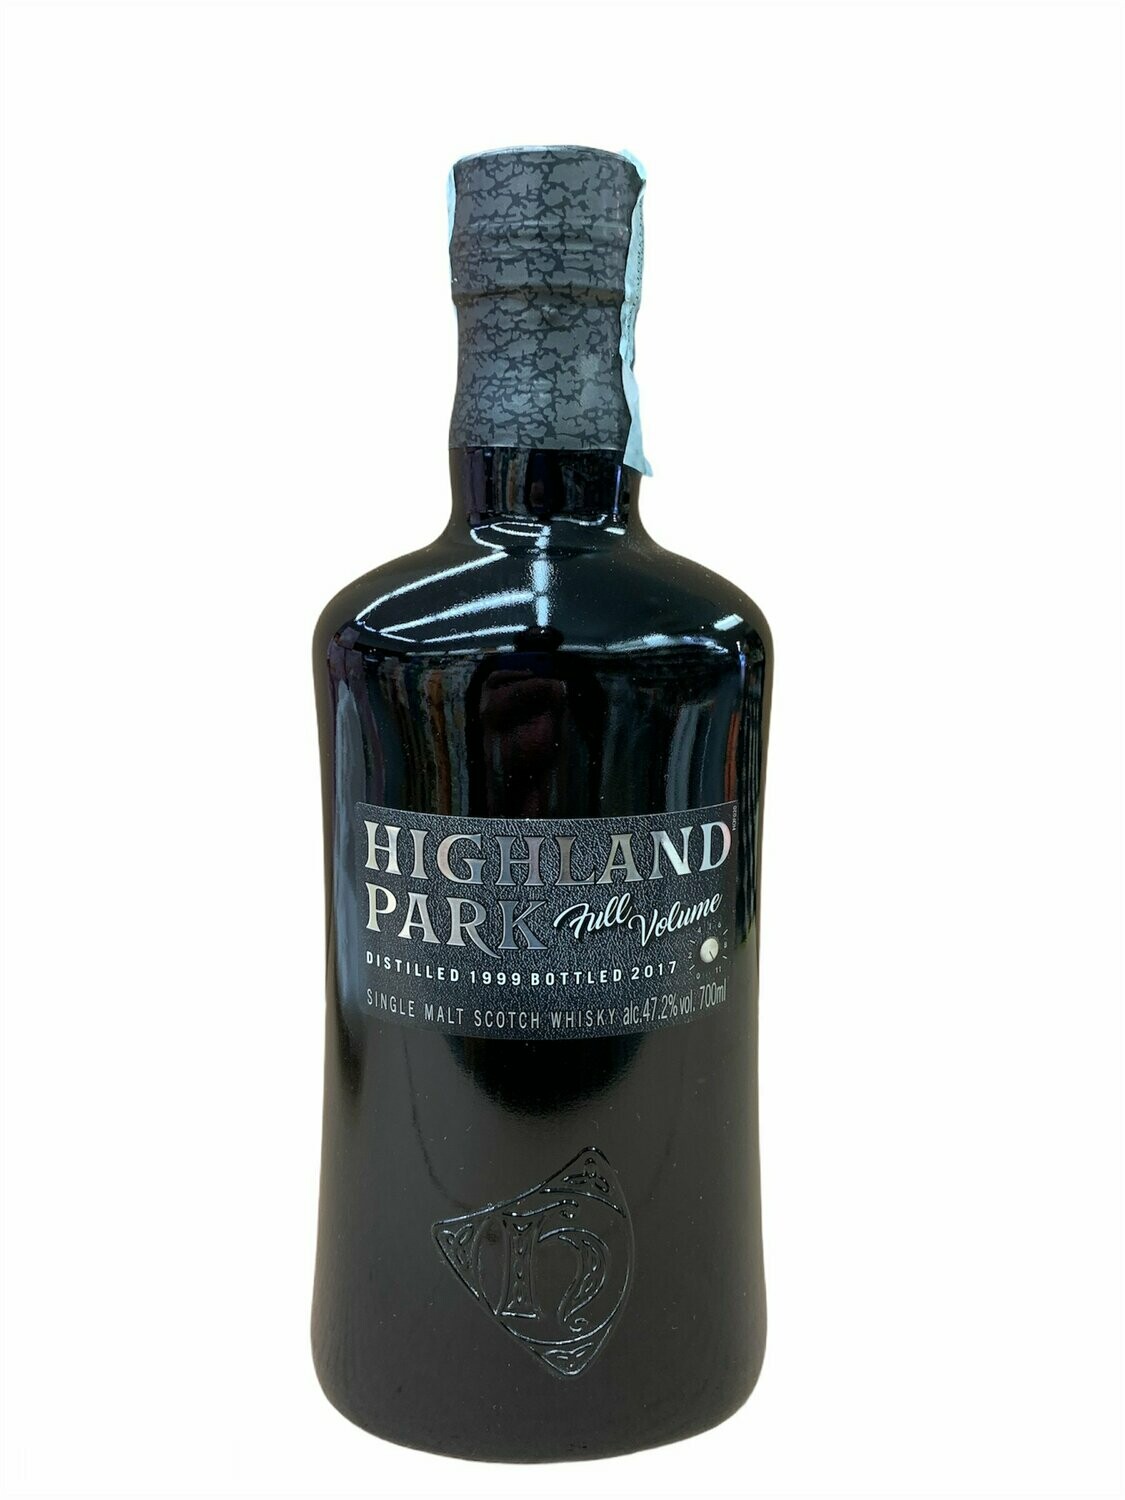 Highland Park Full Volume Scotch Whisky 70cl 47,2%